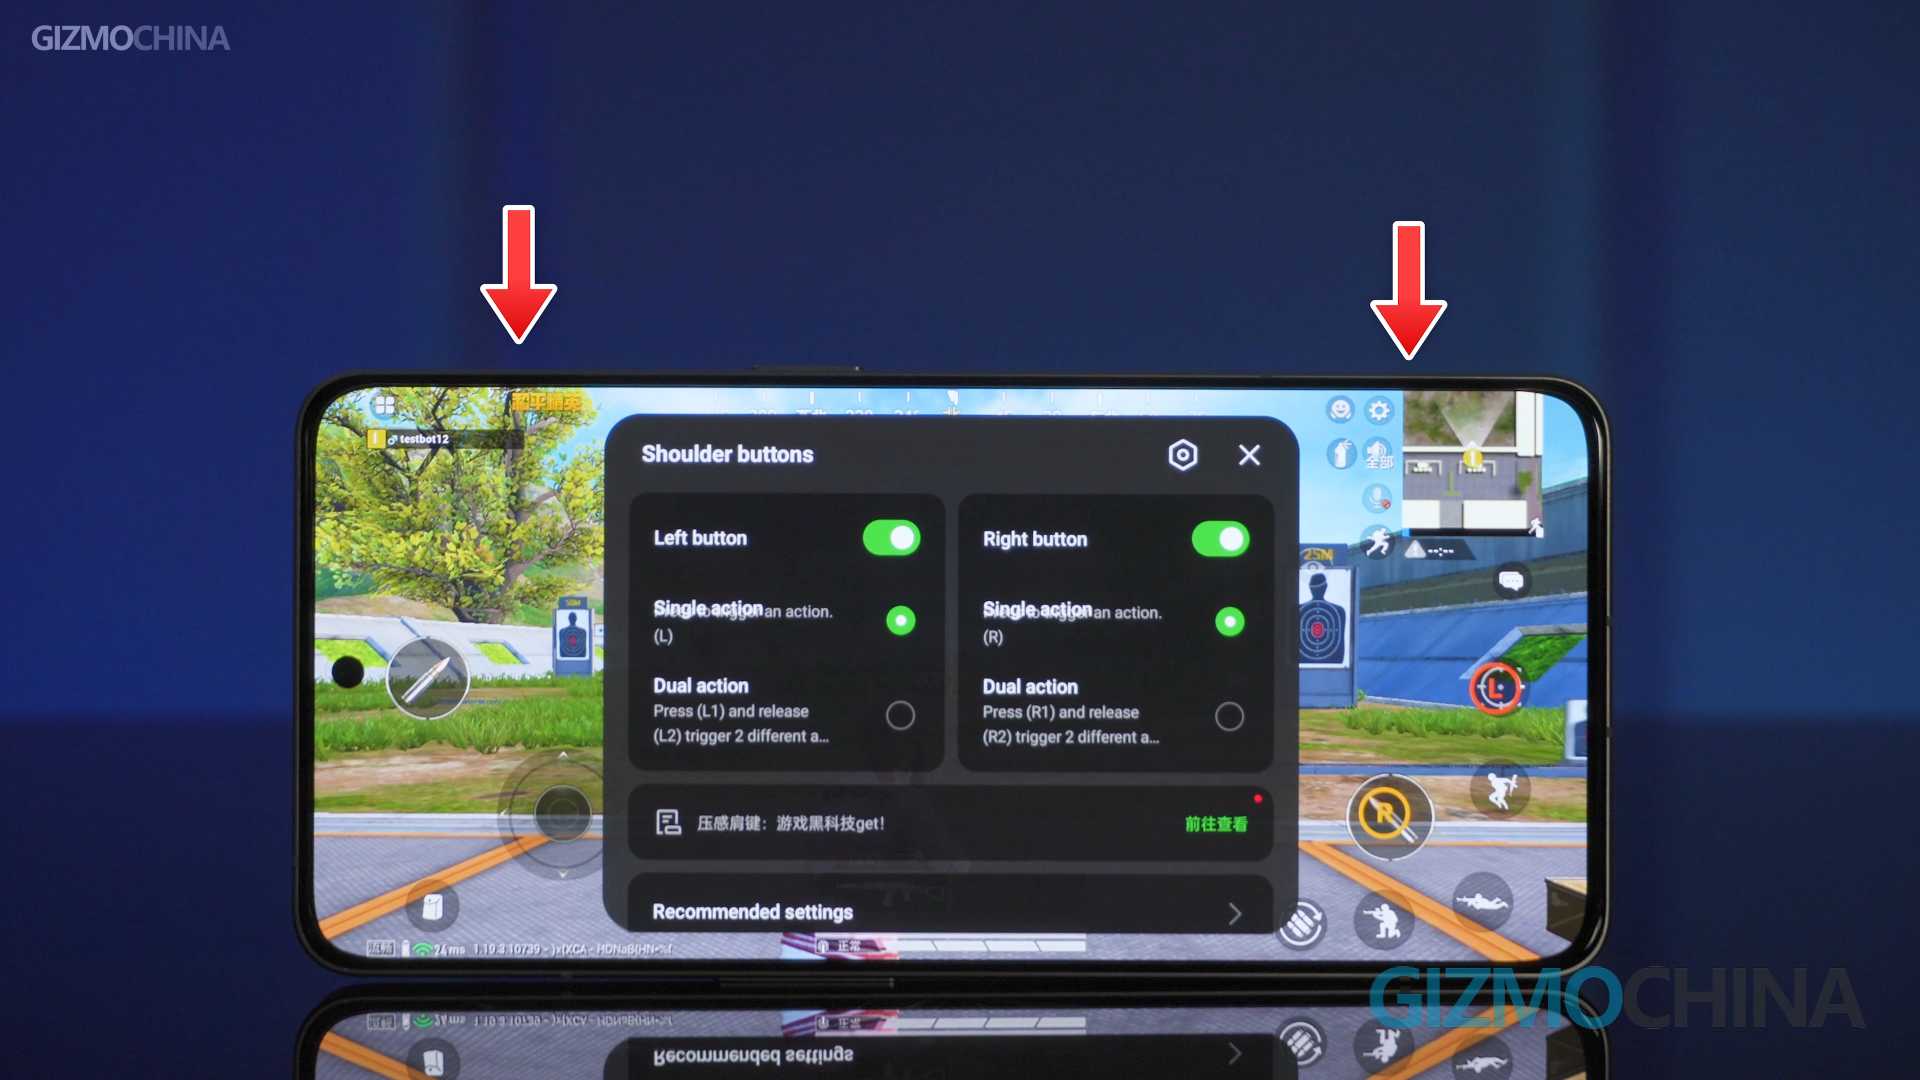 Realme GT2 Pro front image reveals ultra-slim bezels, impressive screen  space - Gizmochina